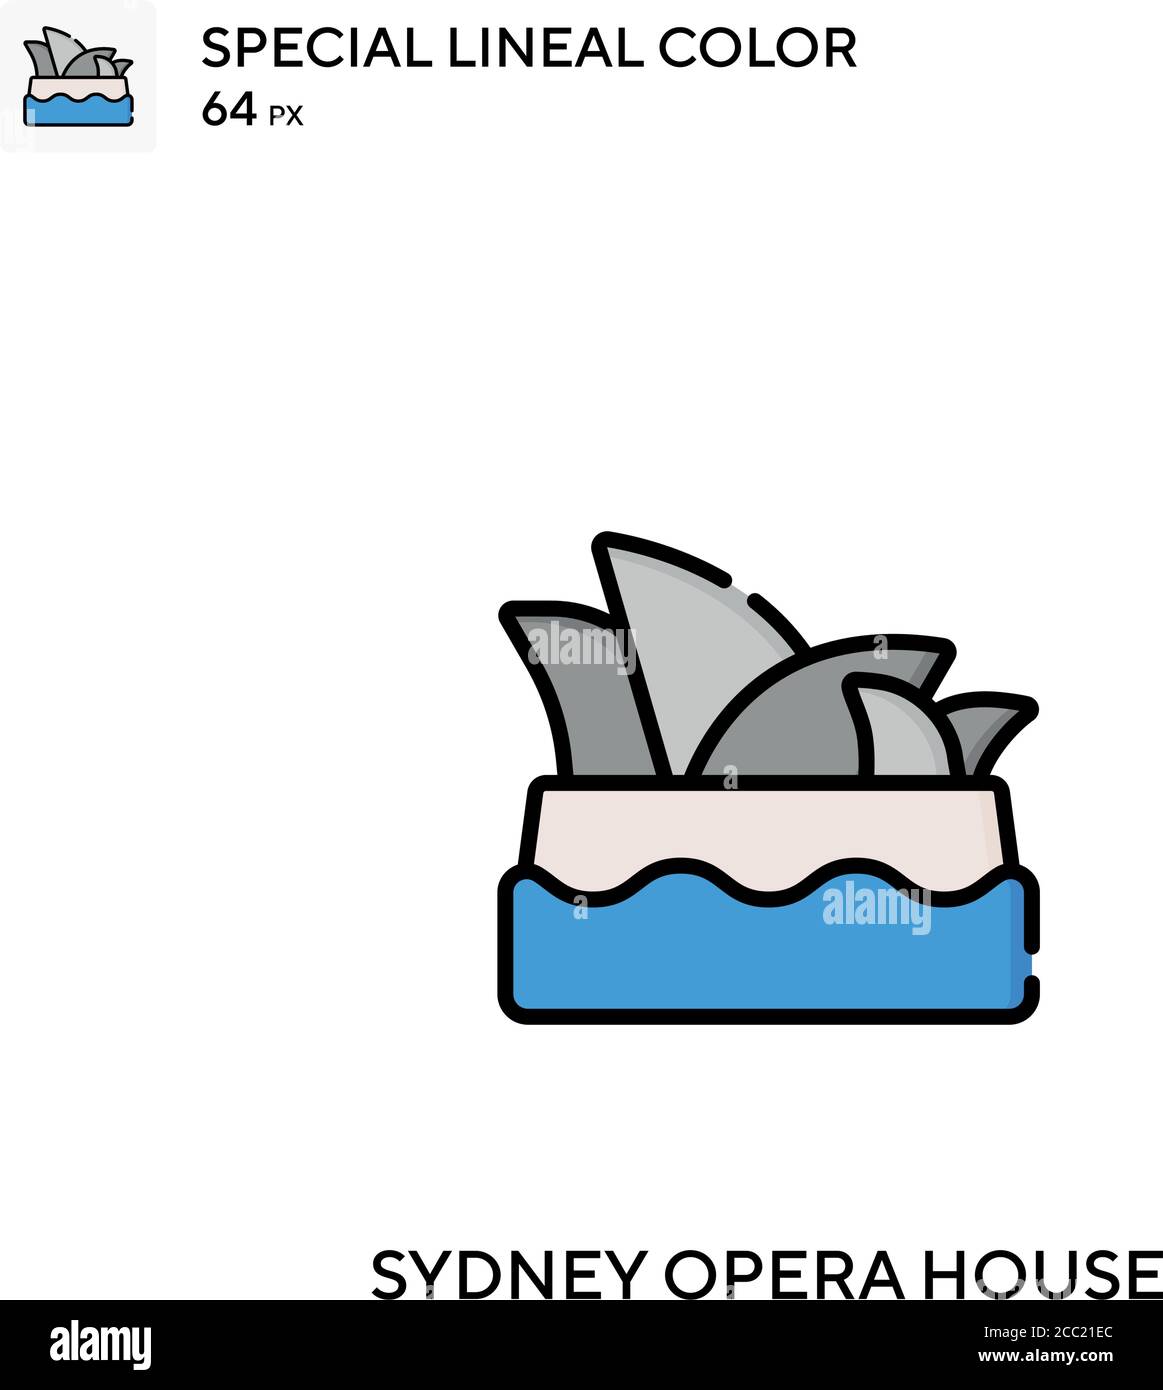 Sydney Opera House Special Lineal Farbe Vektor-Symbol. Sydney Opernhaus Symbole für Ihr Business-Projekt Stock Vektor